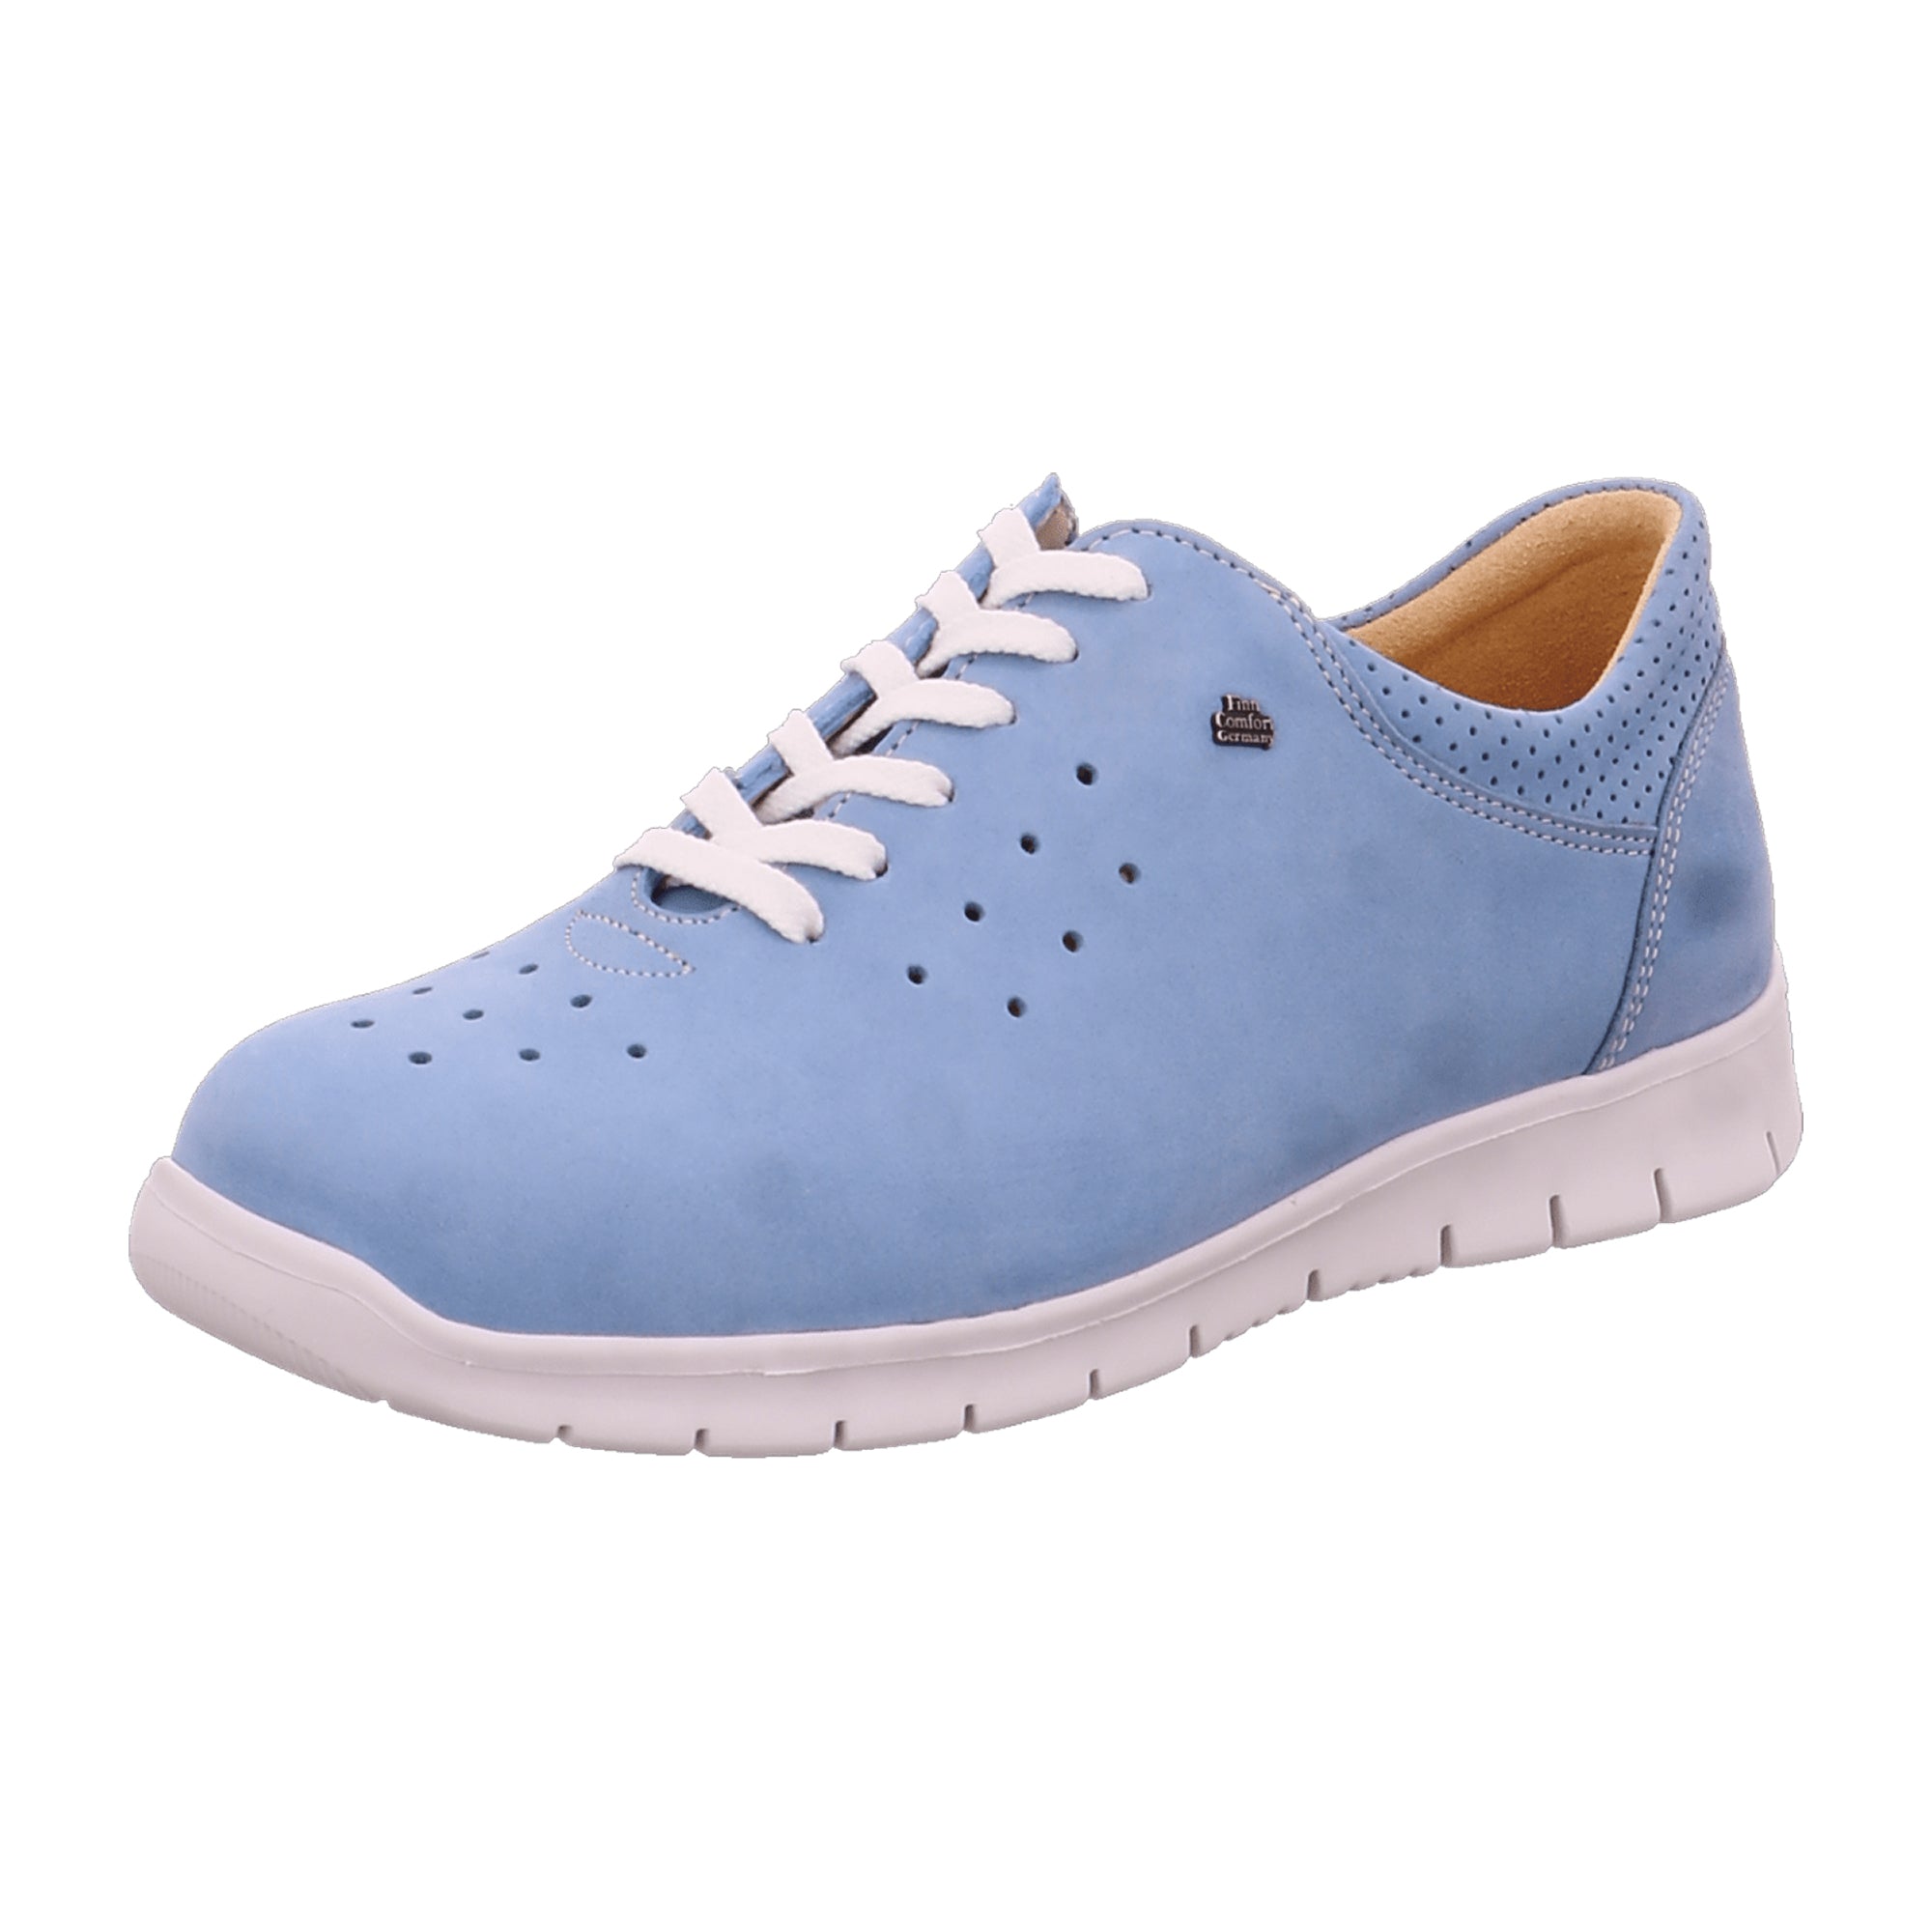 Finn Comfort Barletta Women's Comfort Sneakers, Stylish Blue